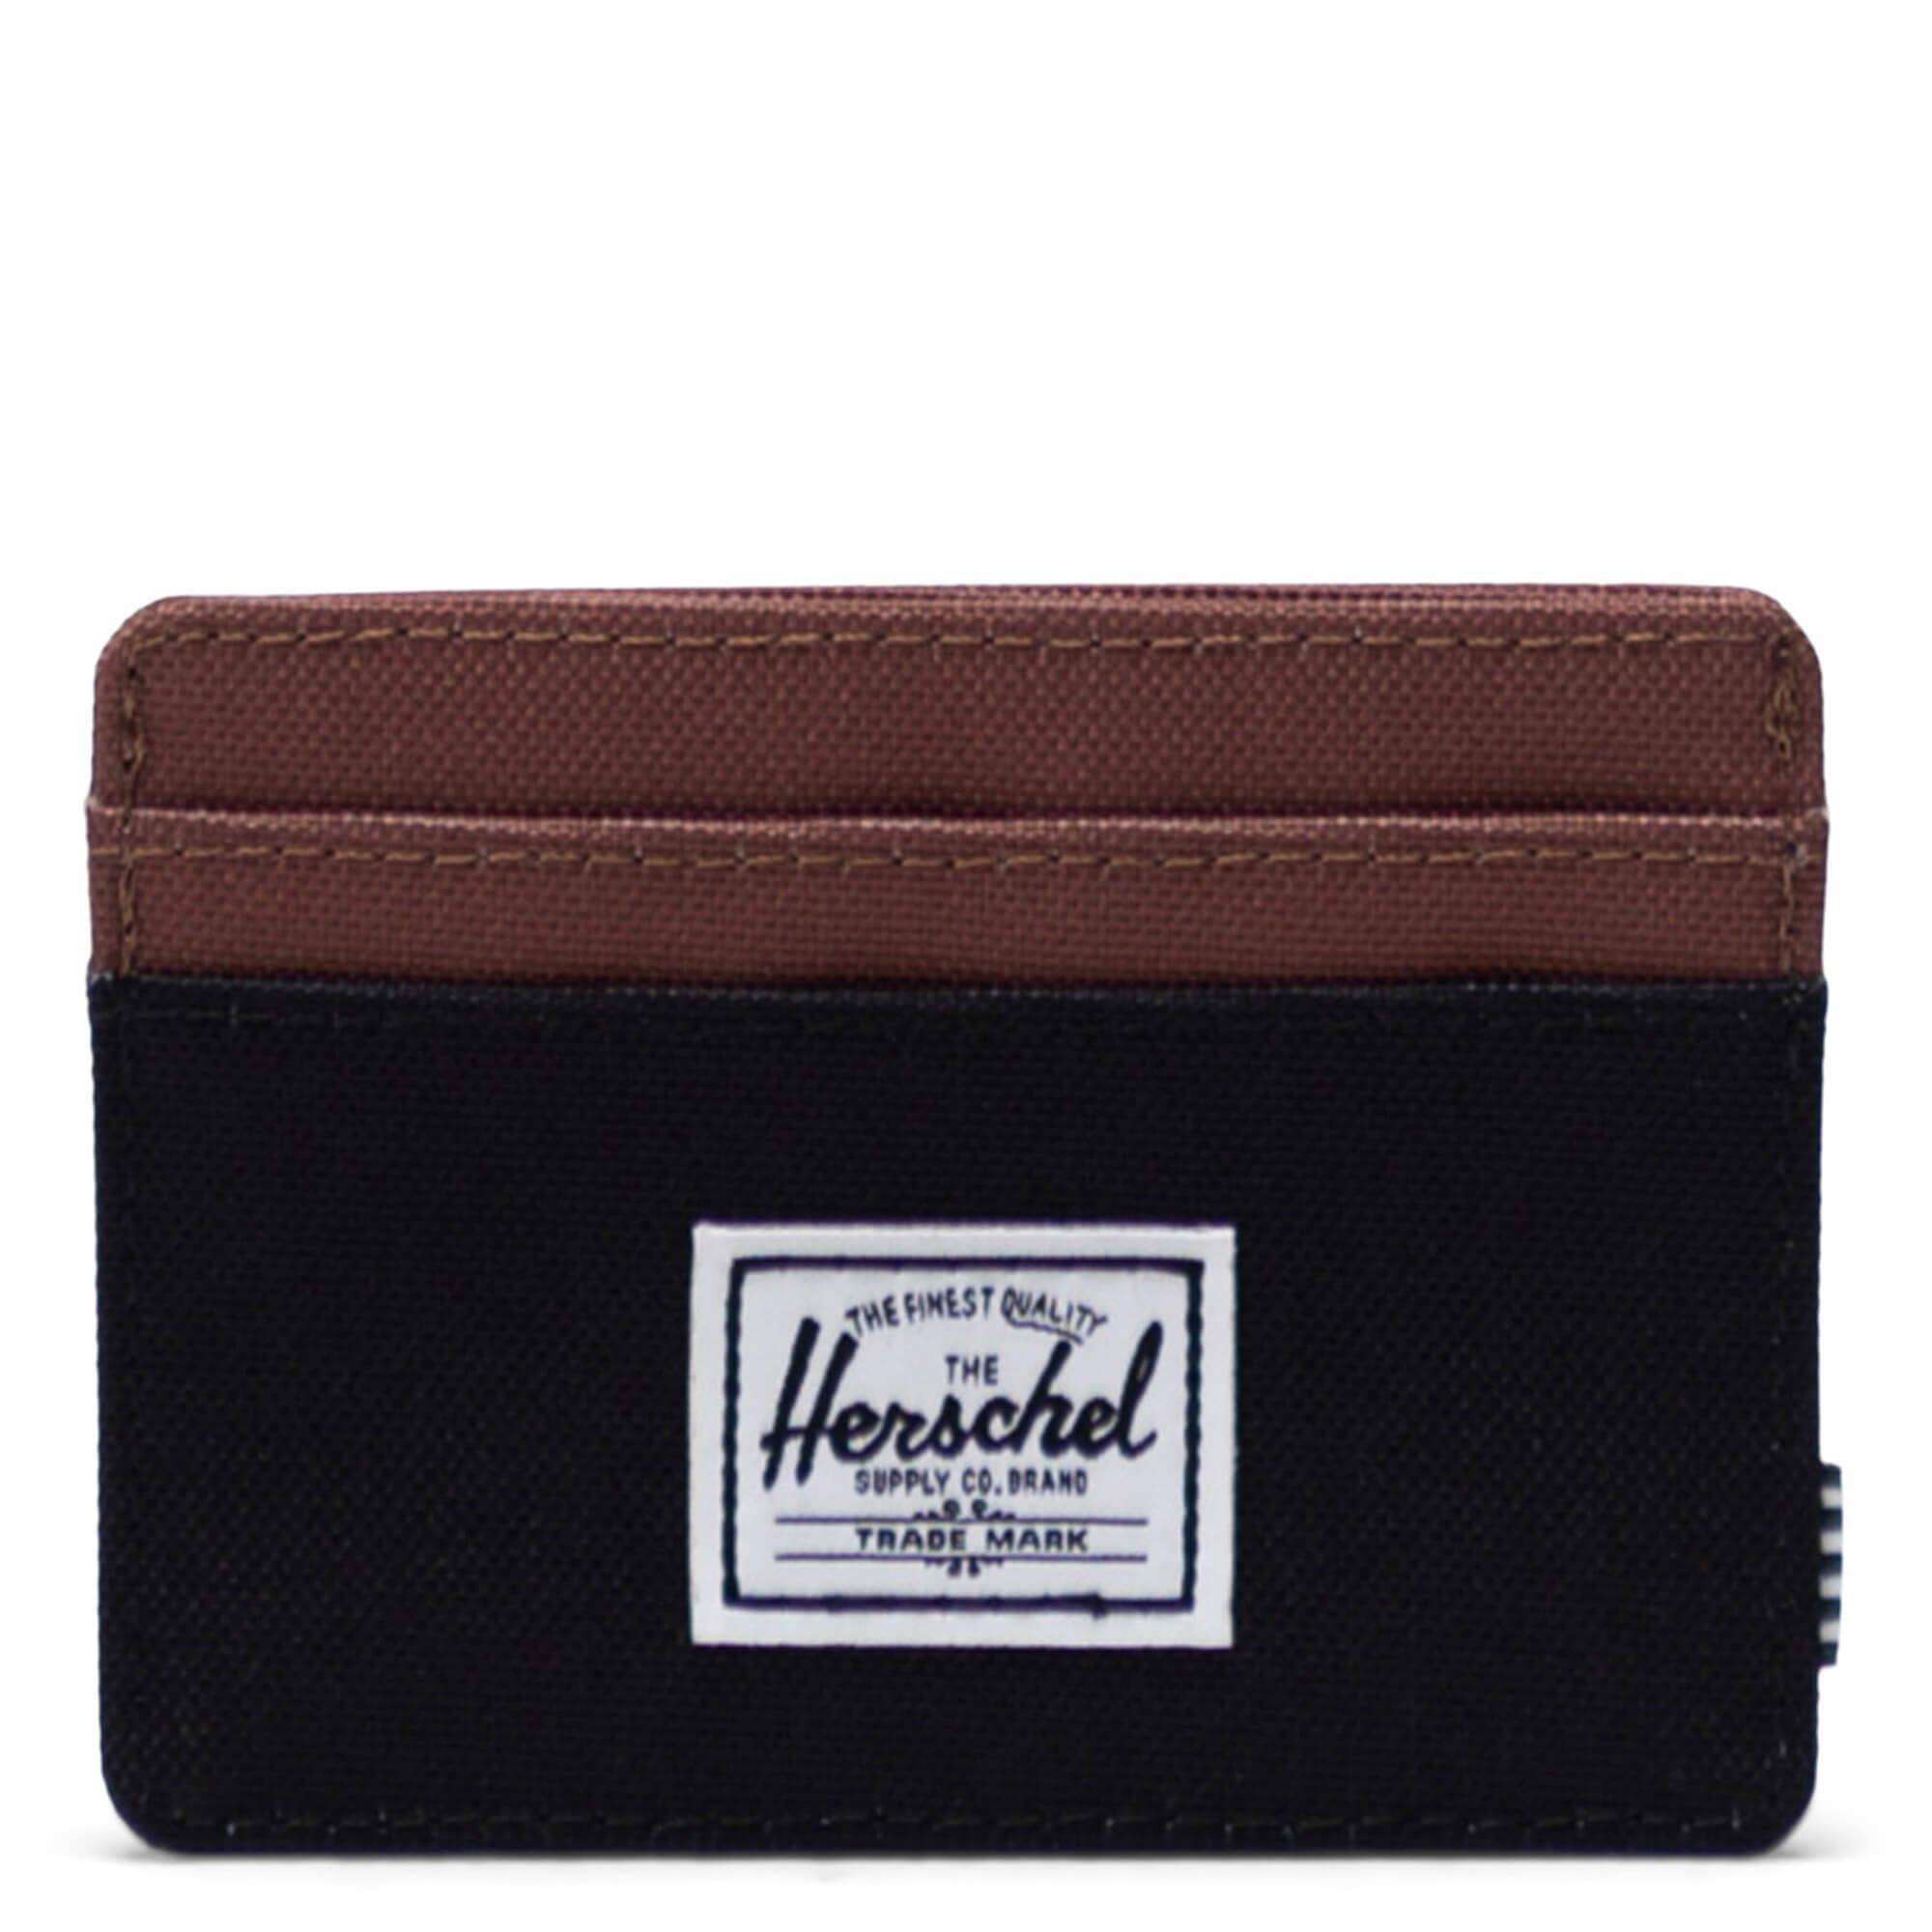 Кошелек Herschel Charlie Kreditkartenetui 4cc 10 см RFID, черный